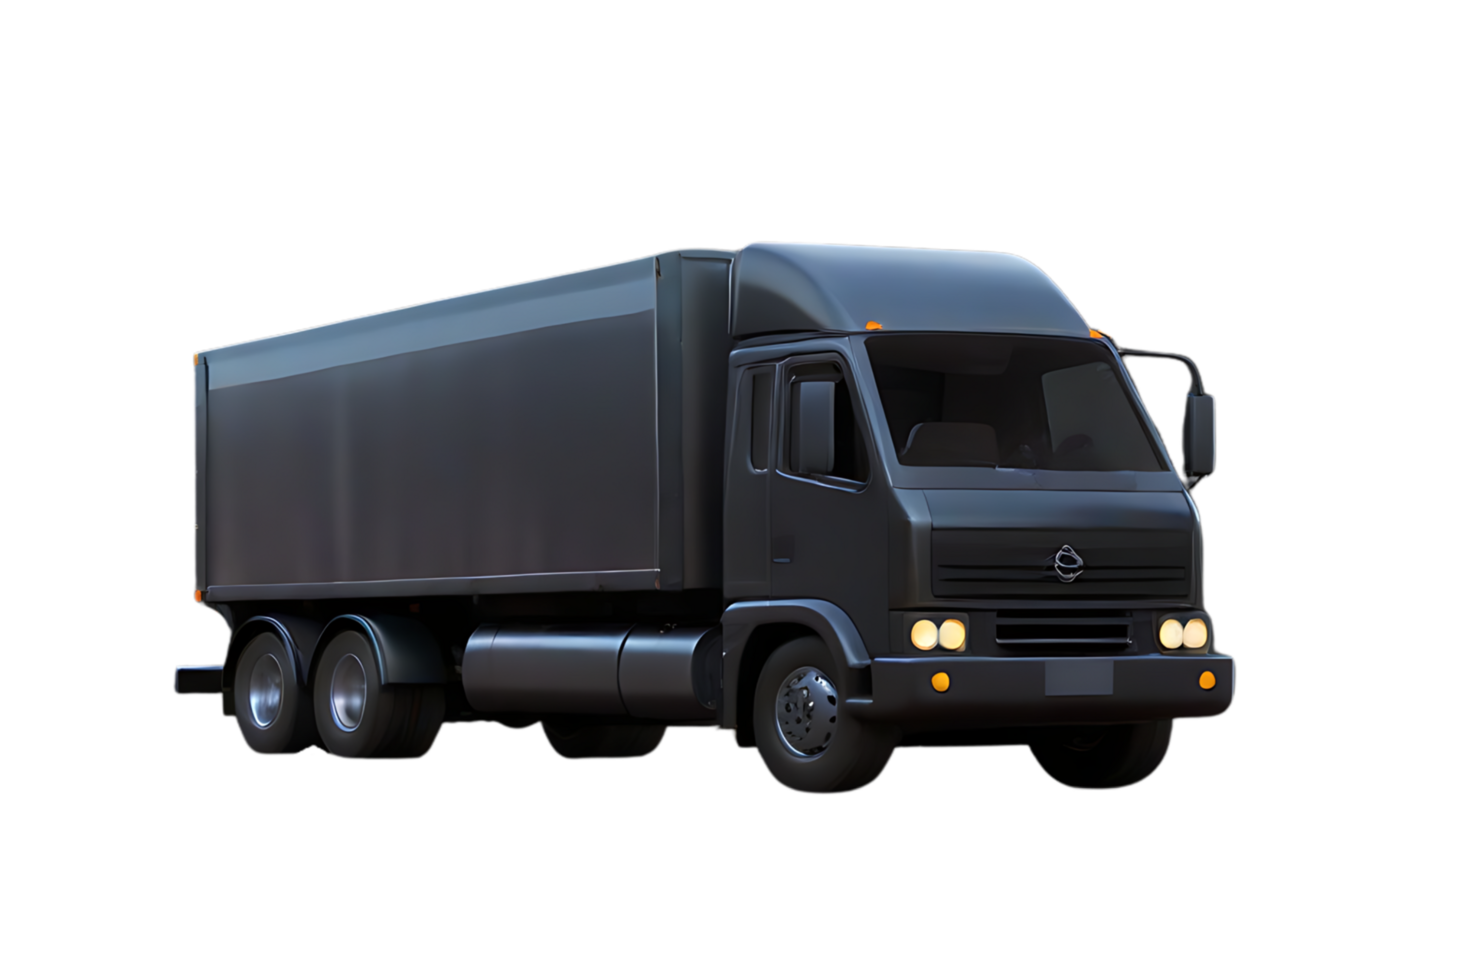 Black Truck delivery van high quality 3d render png